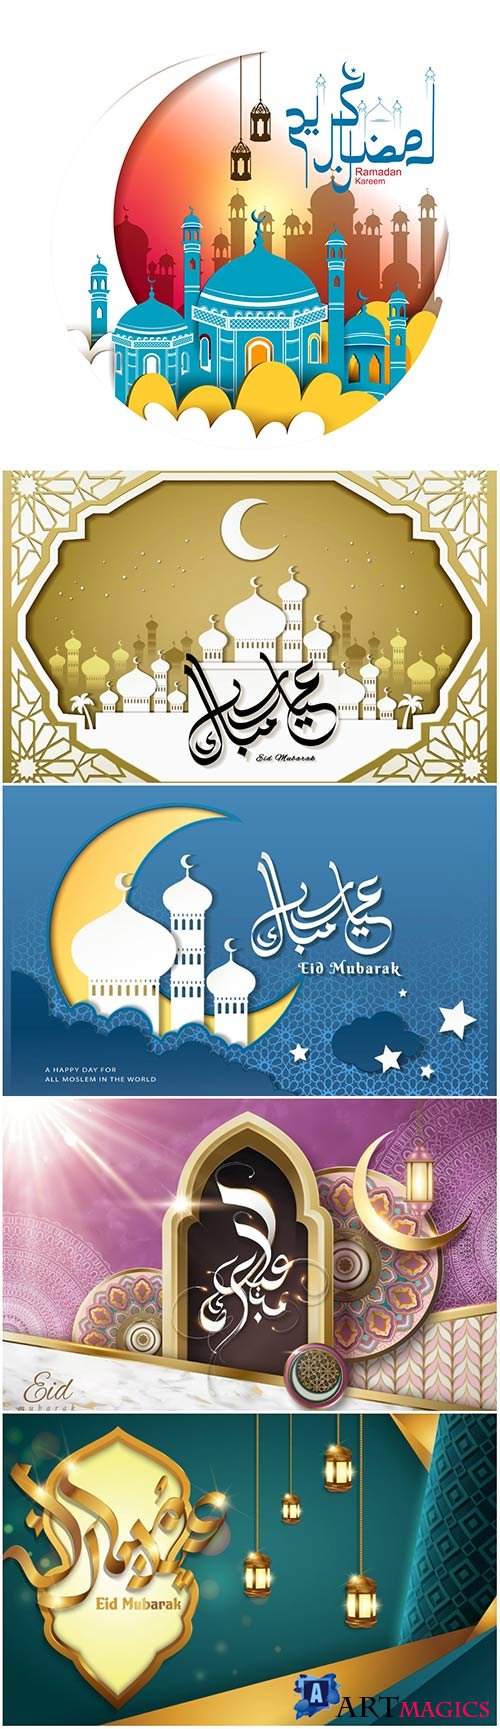 Islamic celebration background with text Ramadan Kareem, Eid Mubarak calligraphy